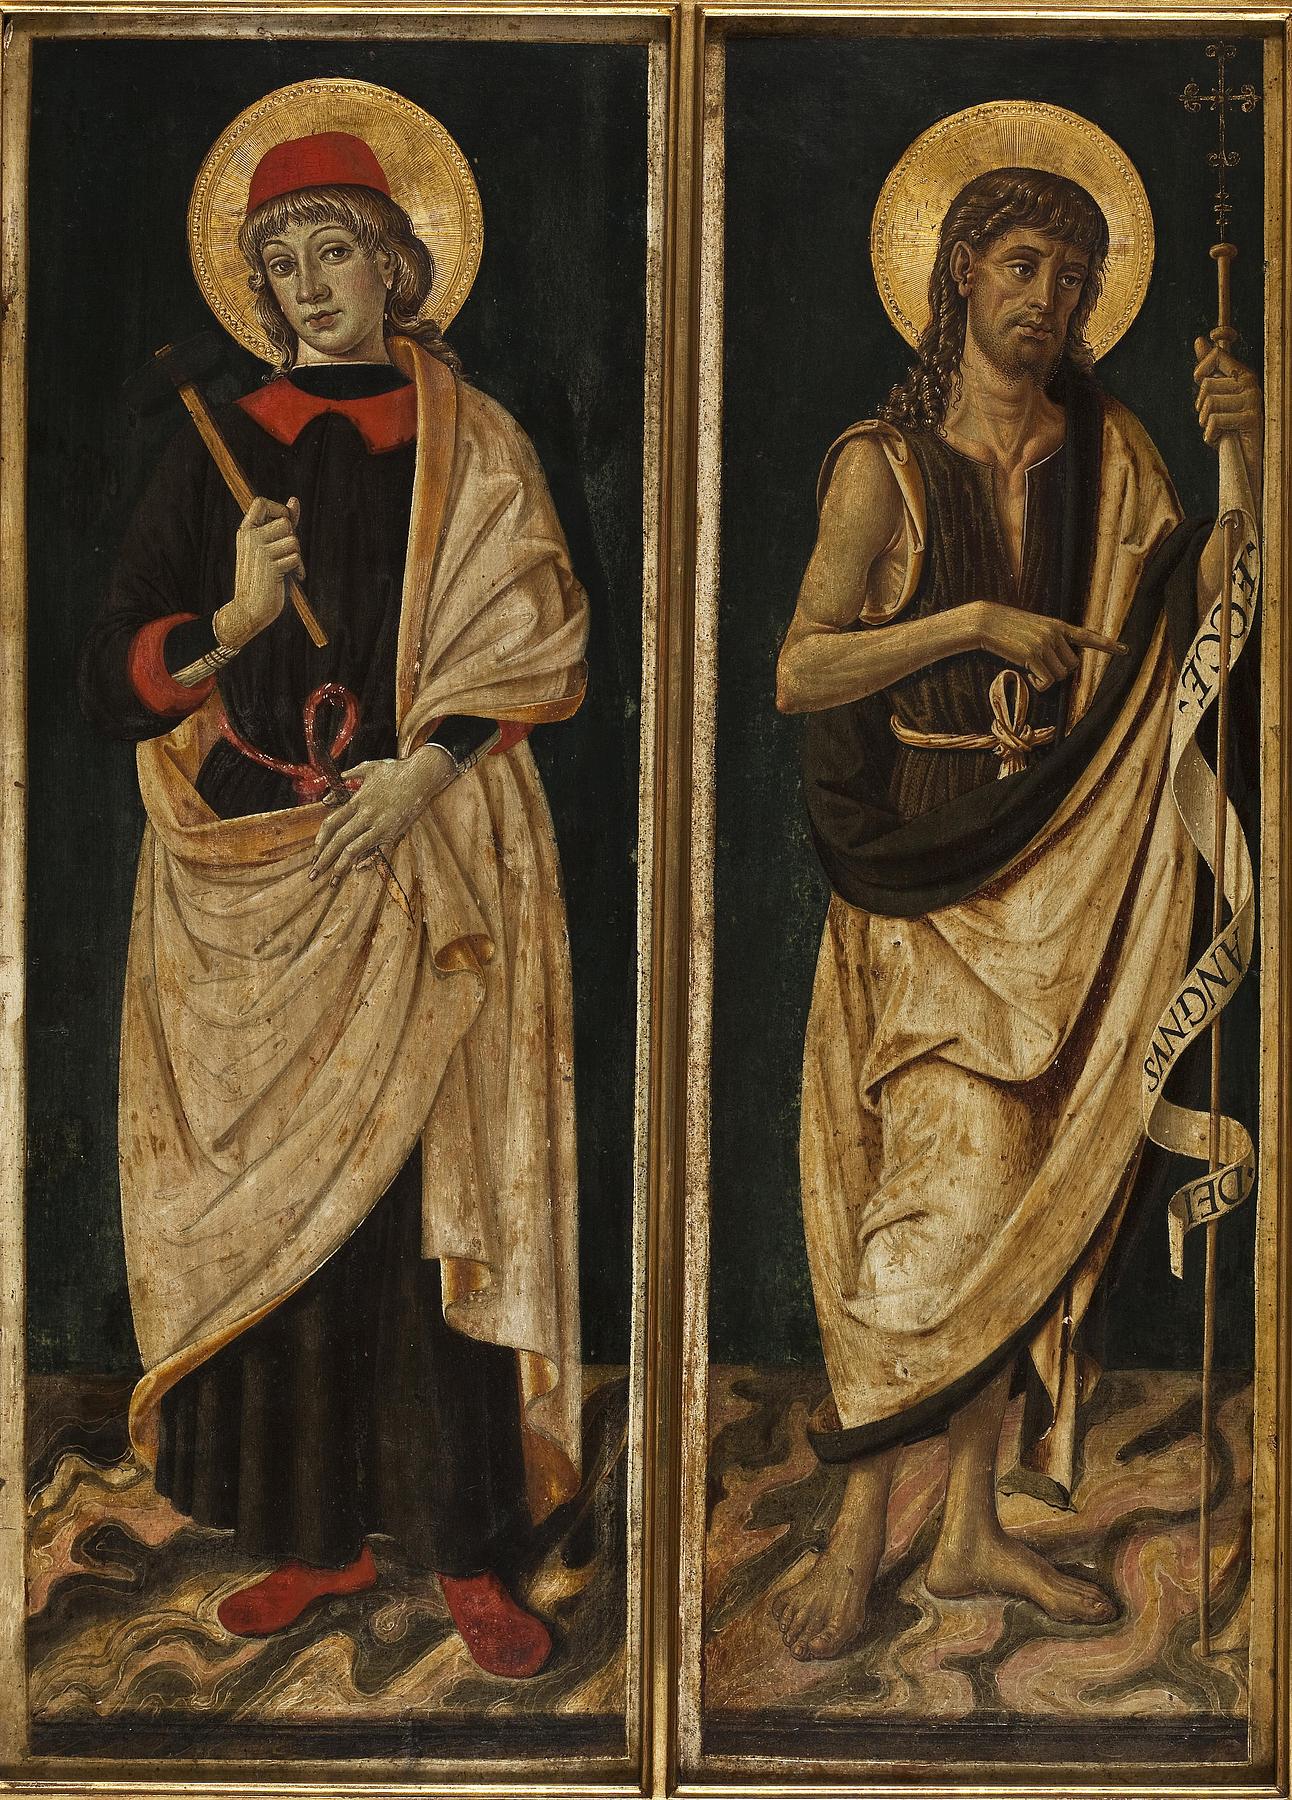 Saint Eligius and John the Baptist, B4